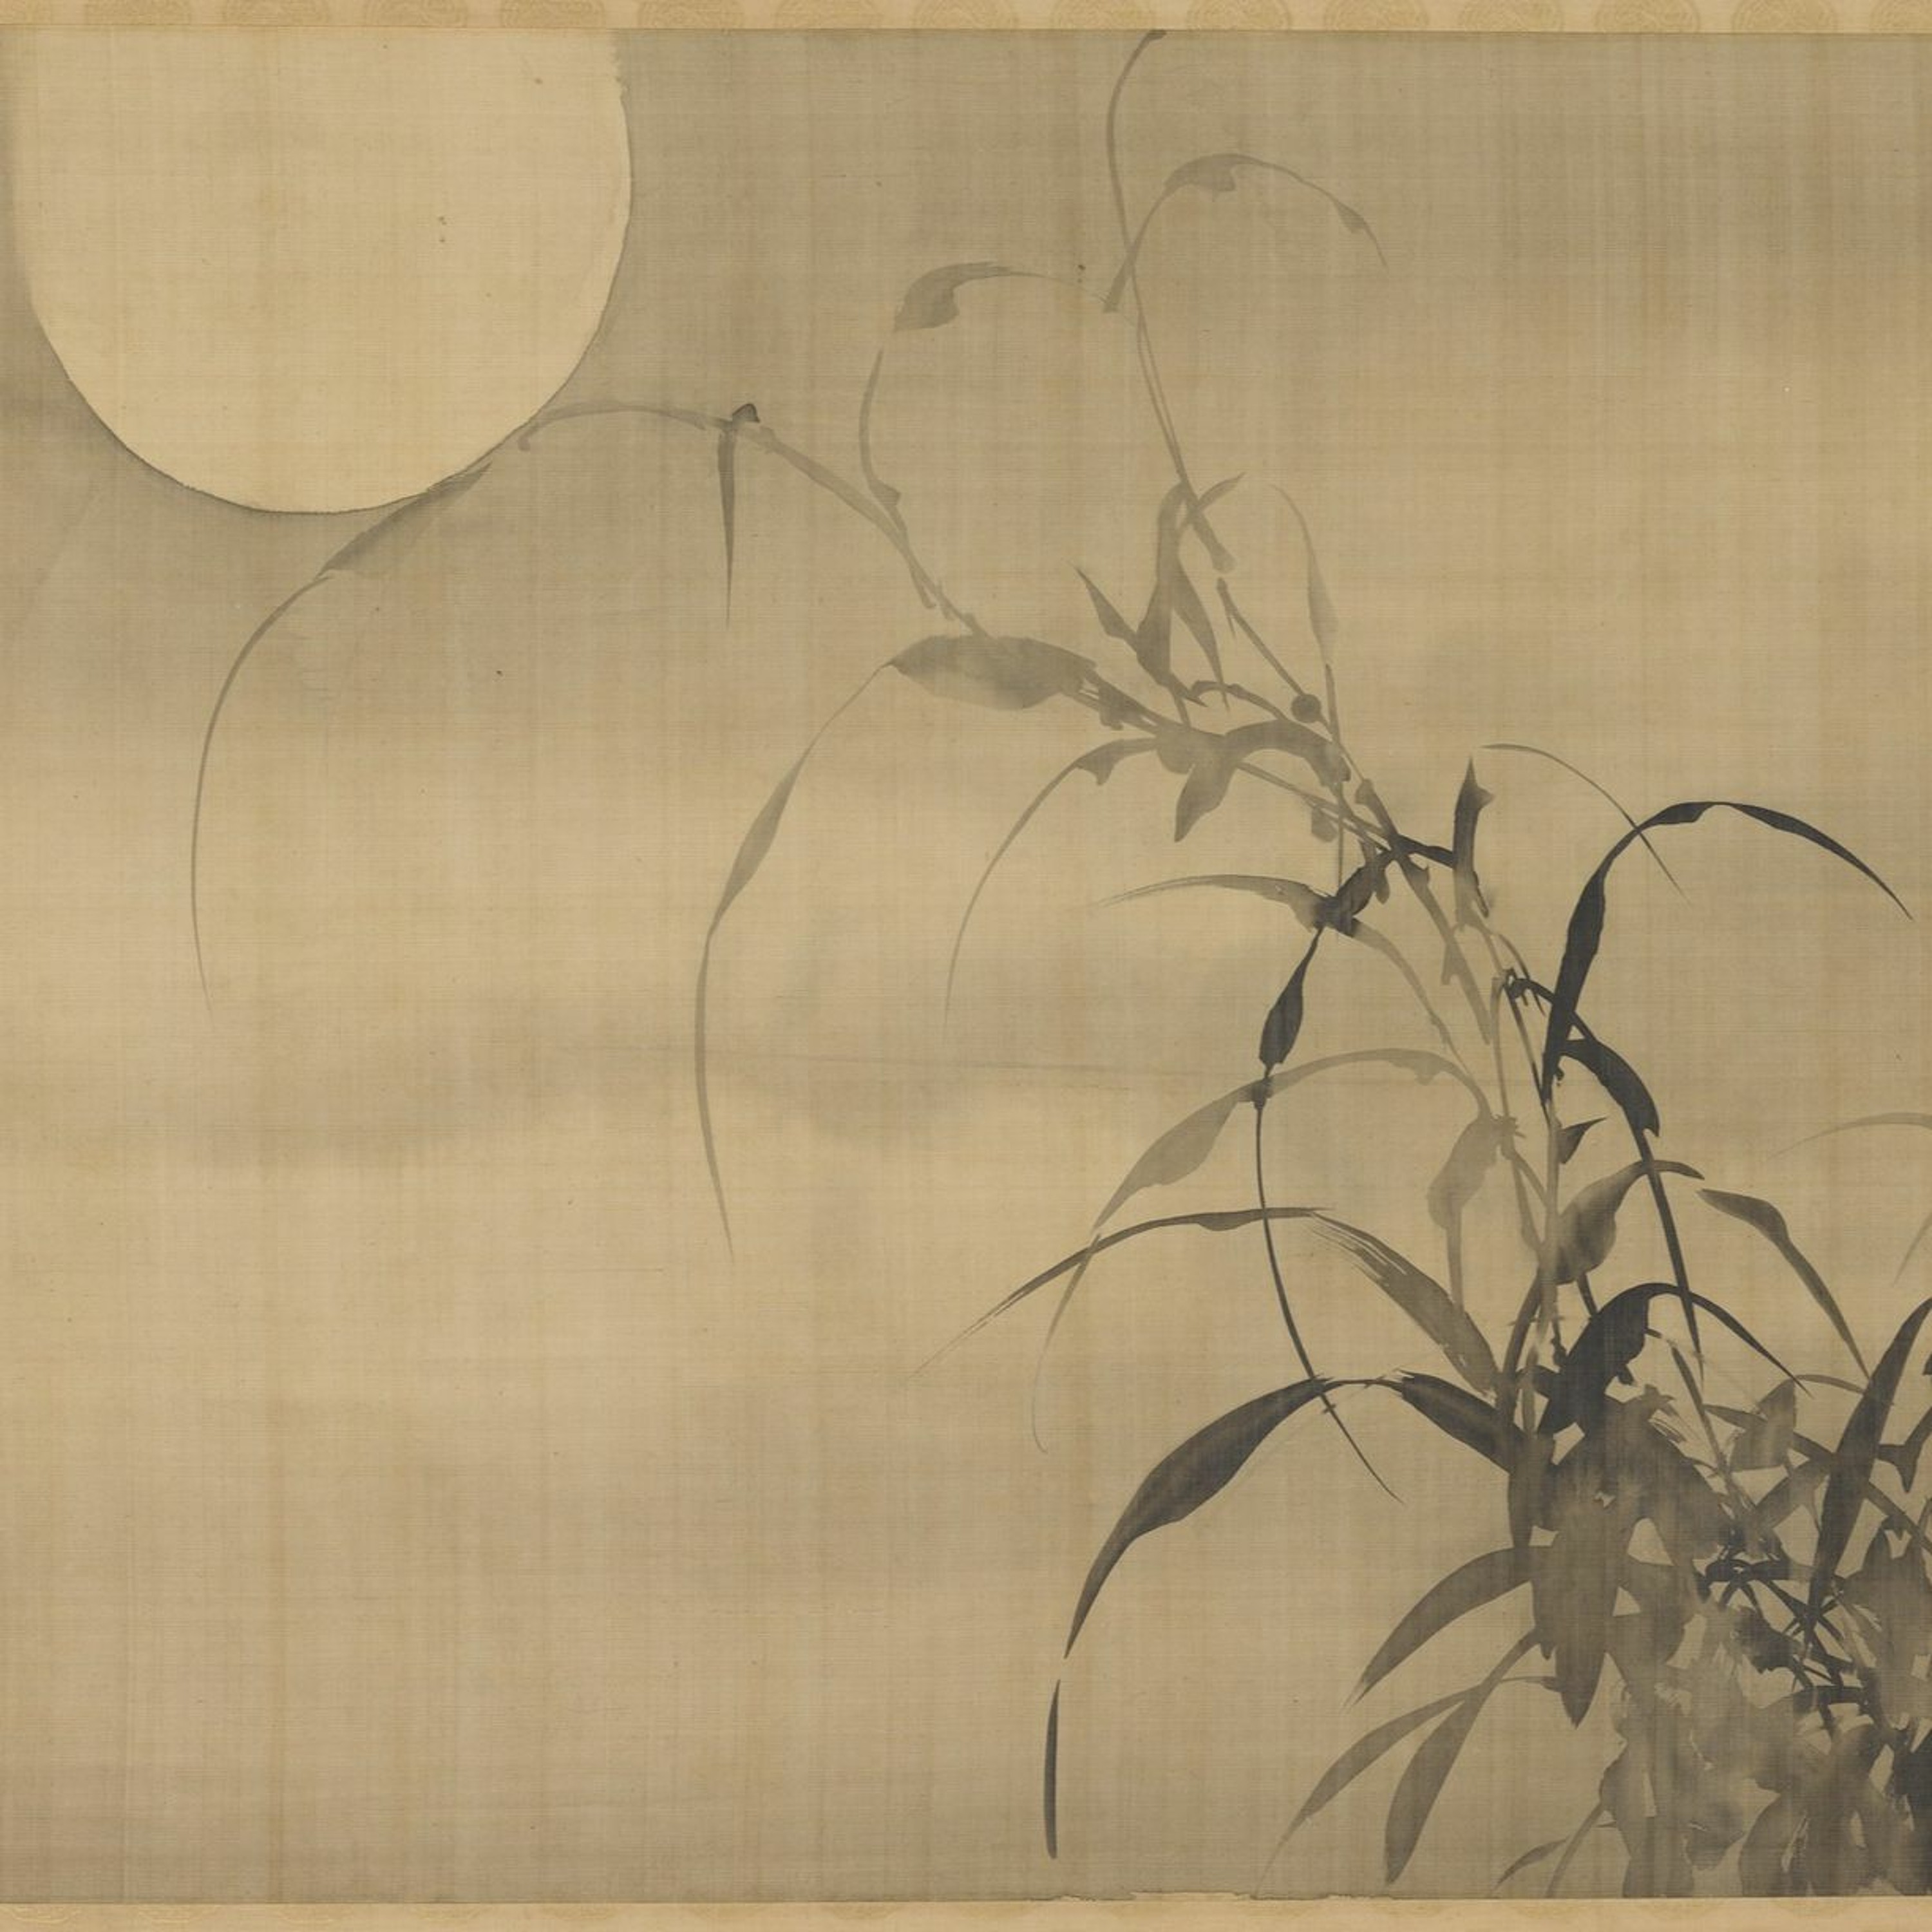 Ep. 53 - Painting Edo, Post-Pandemic